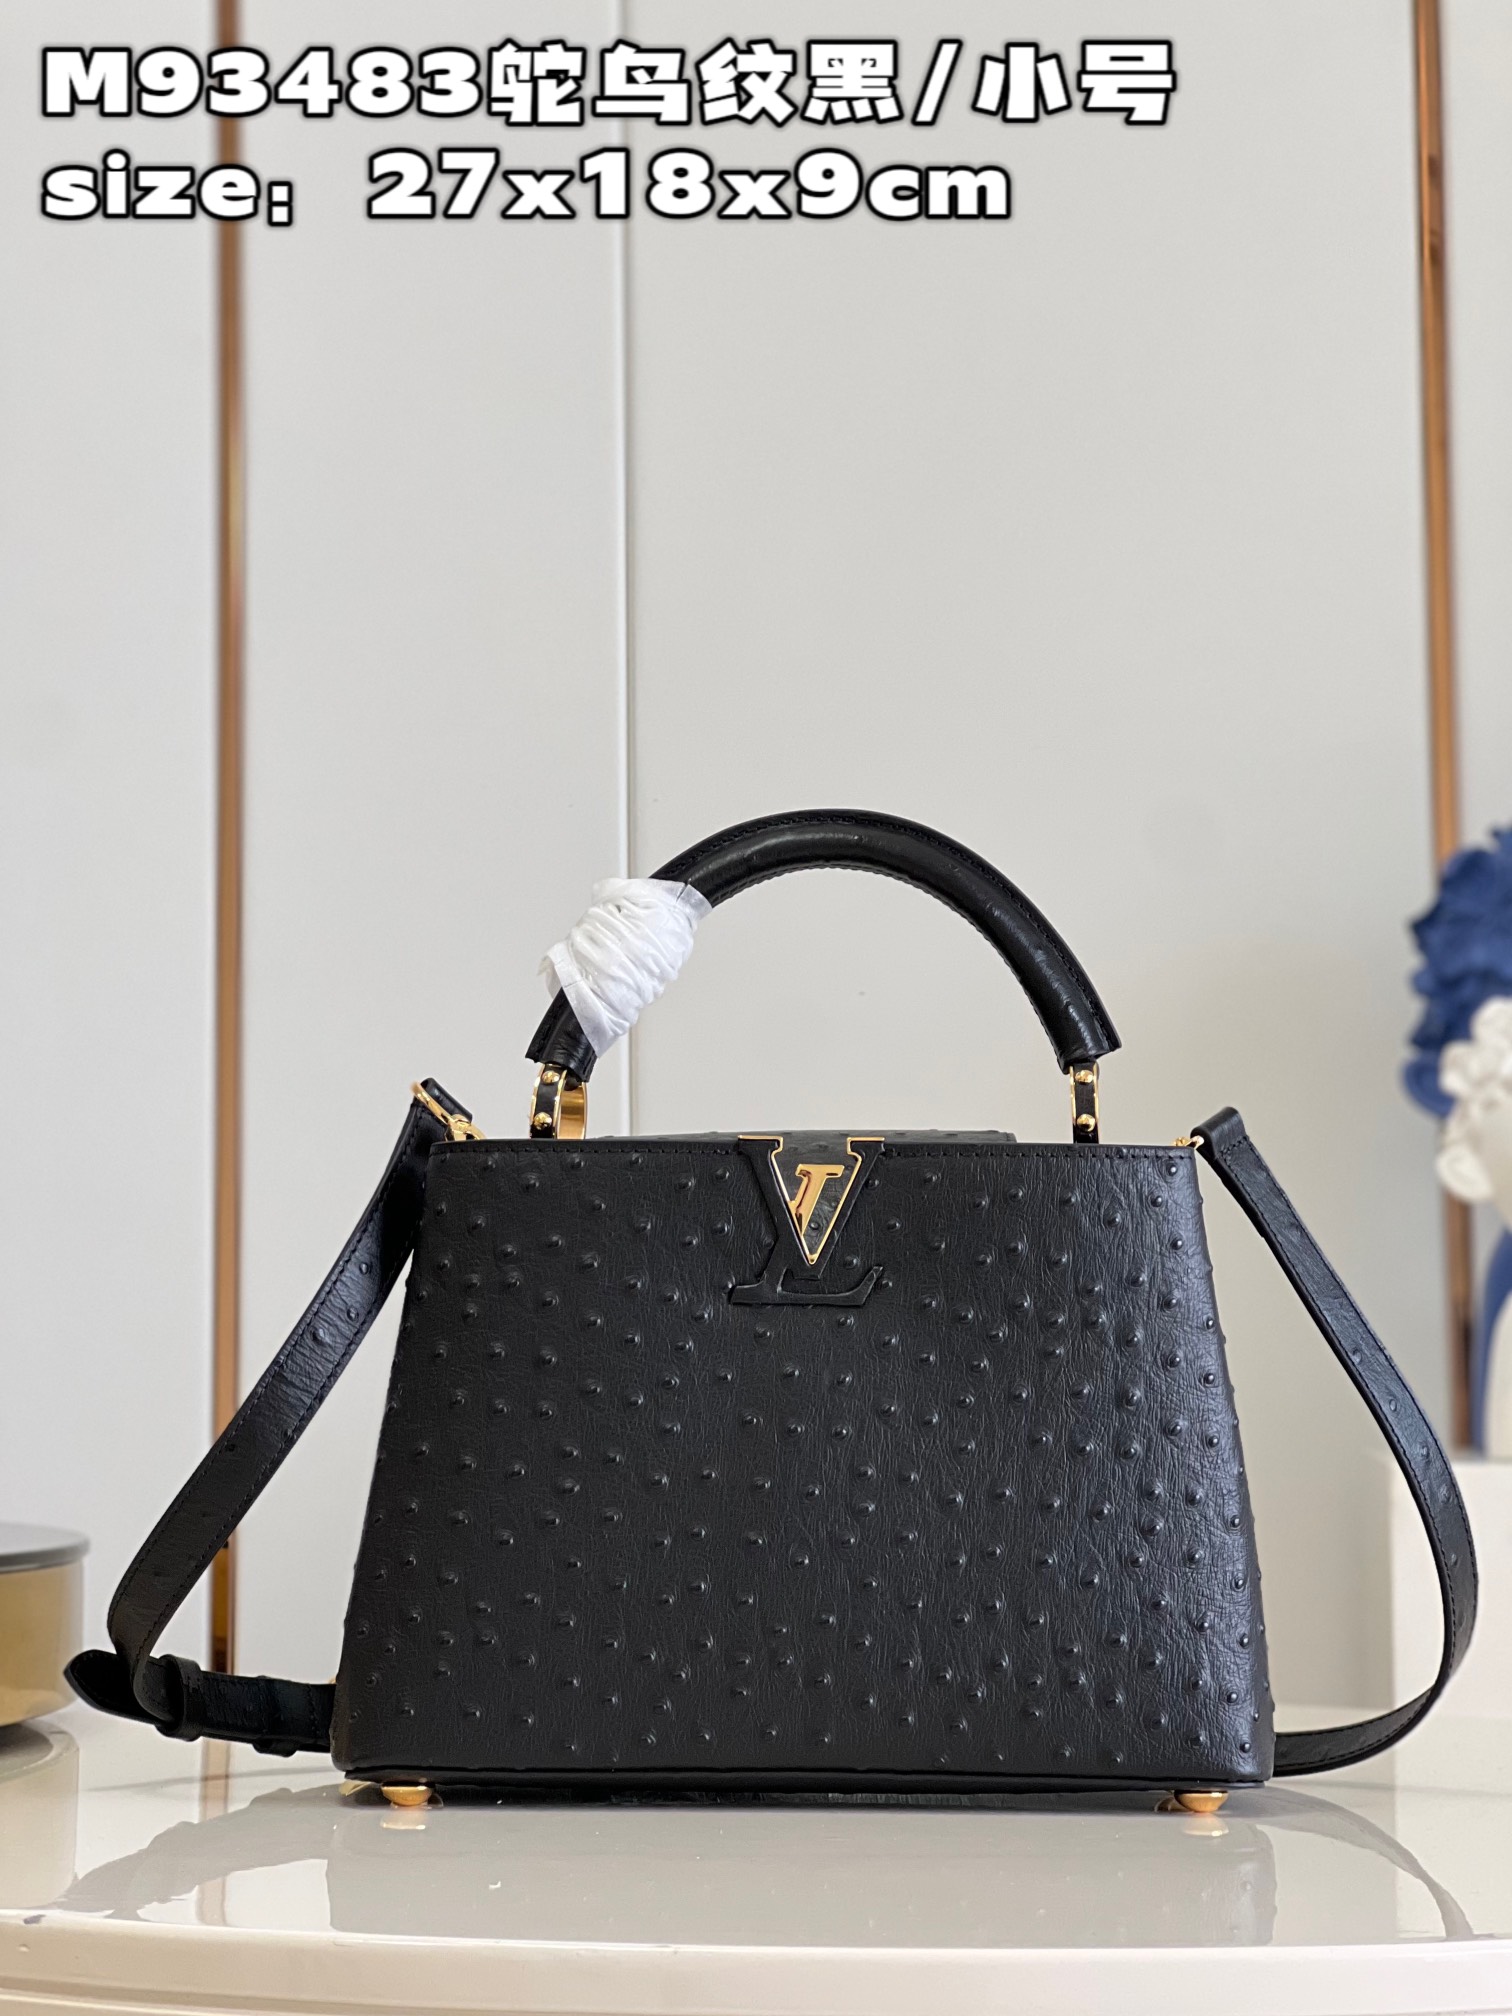 Louis Vuitton LV Capucines Bags Handbags Black Calfskin Cowhide M93483